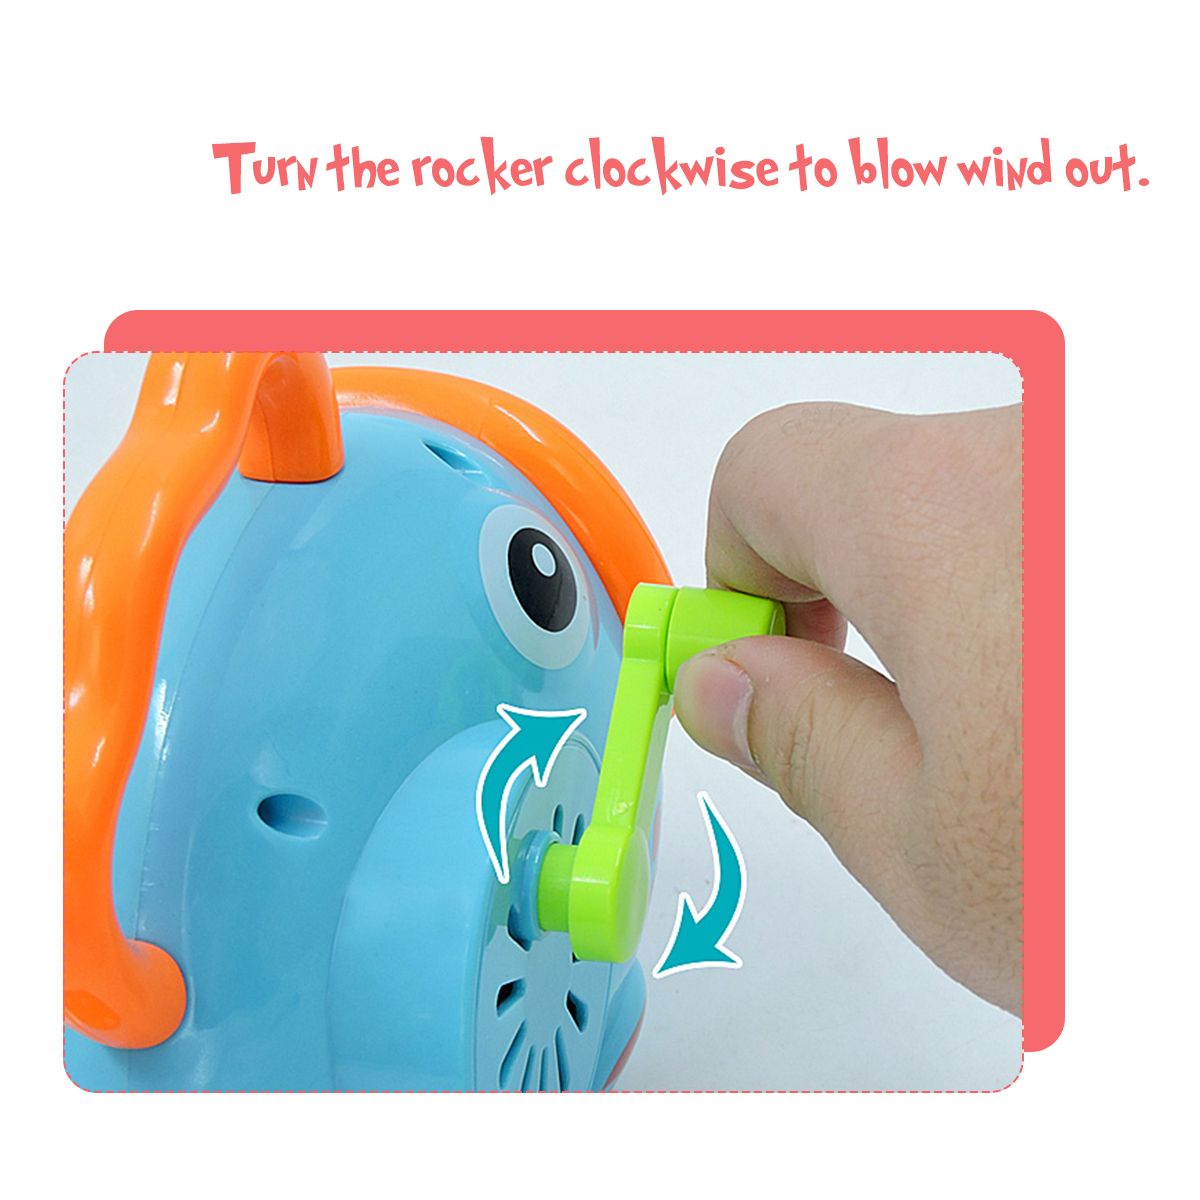 Car-Fish-Manual-Bubble-Machine-Baby-Shower-Bubble-Maker-Blower-Science-Toys-1520781